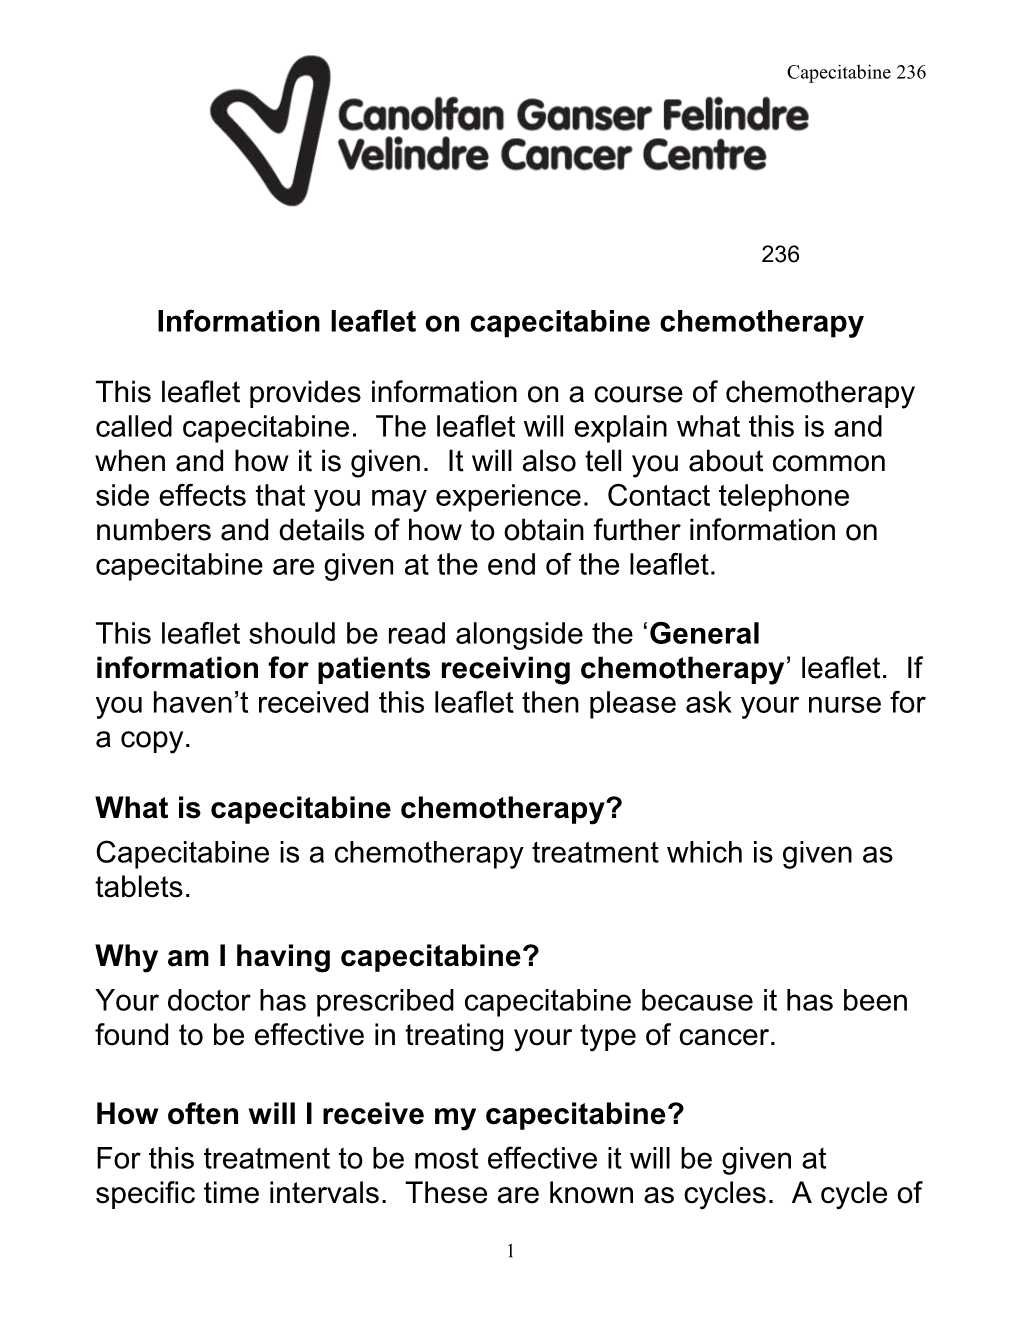 Information Leaflet on Capecitabine Chemotherapy